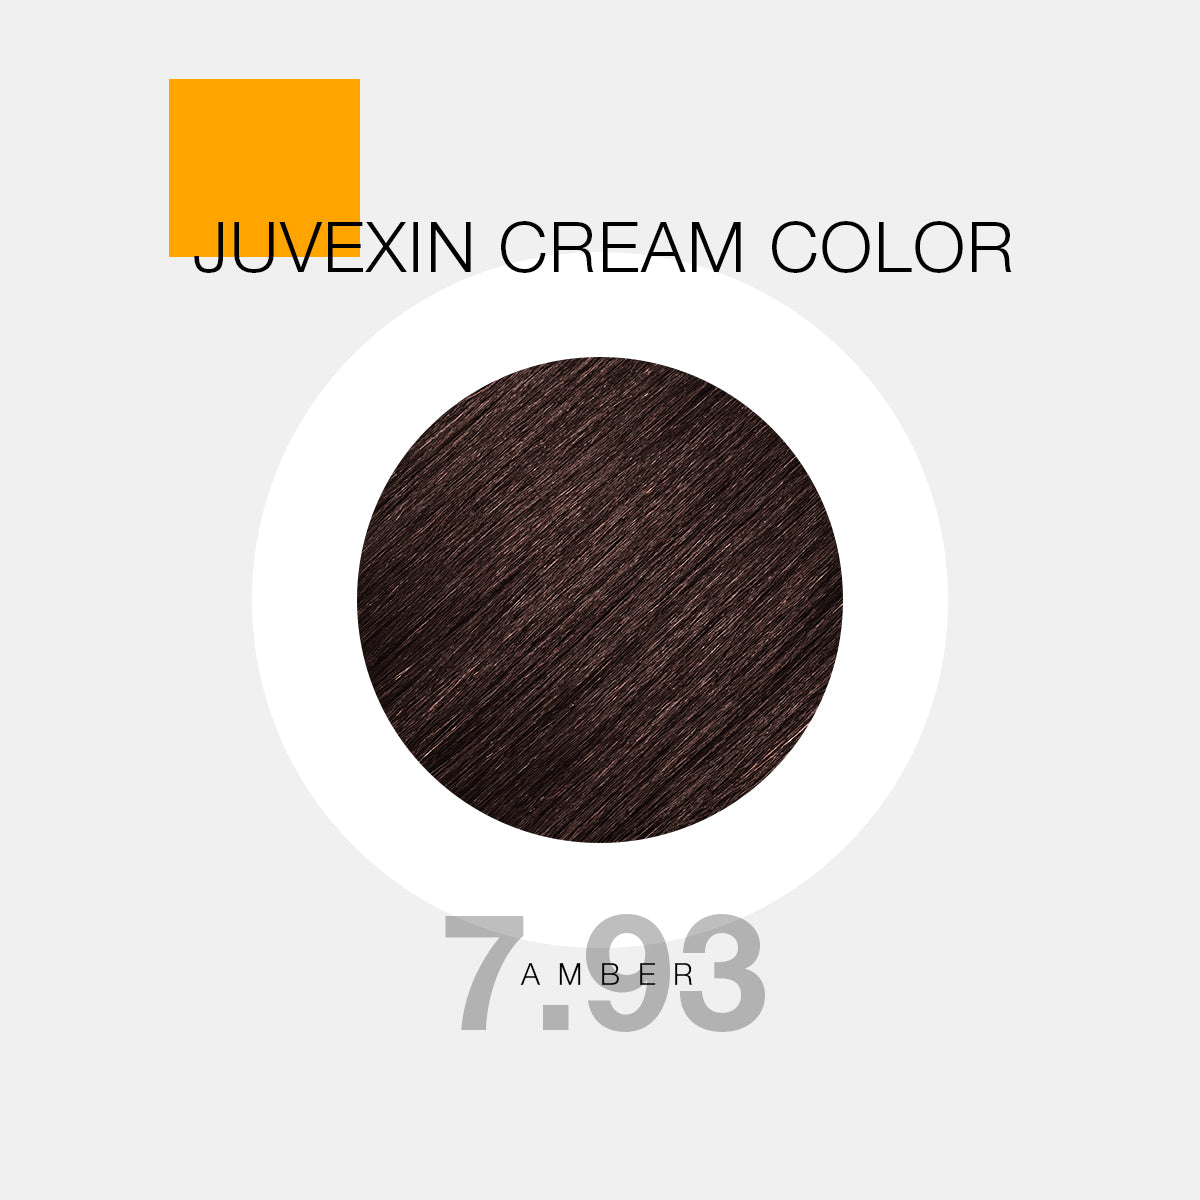 Juvexin Cream Color Pro Amber